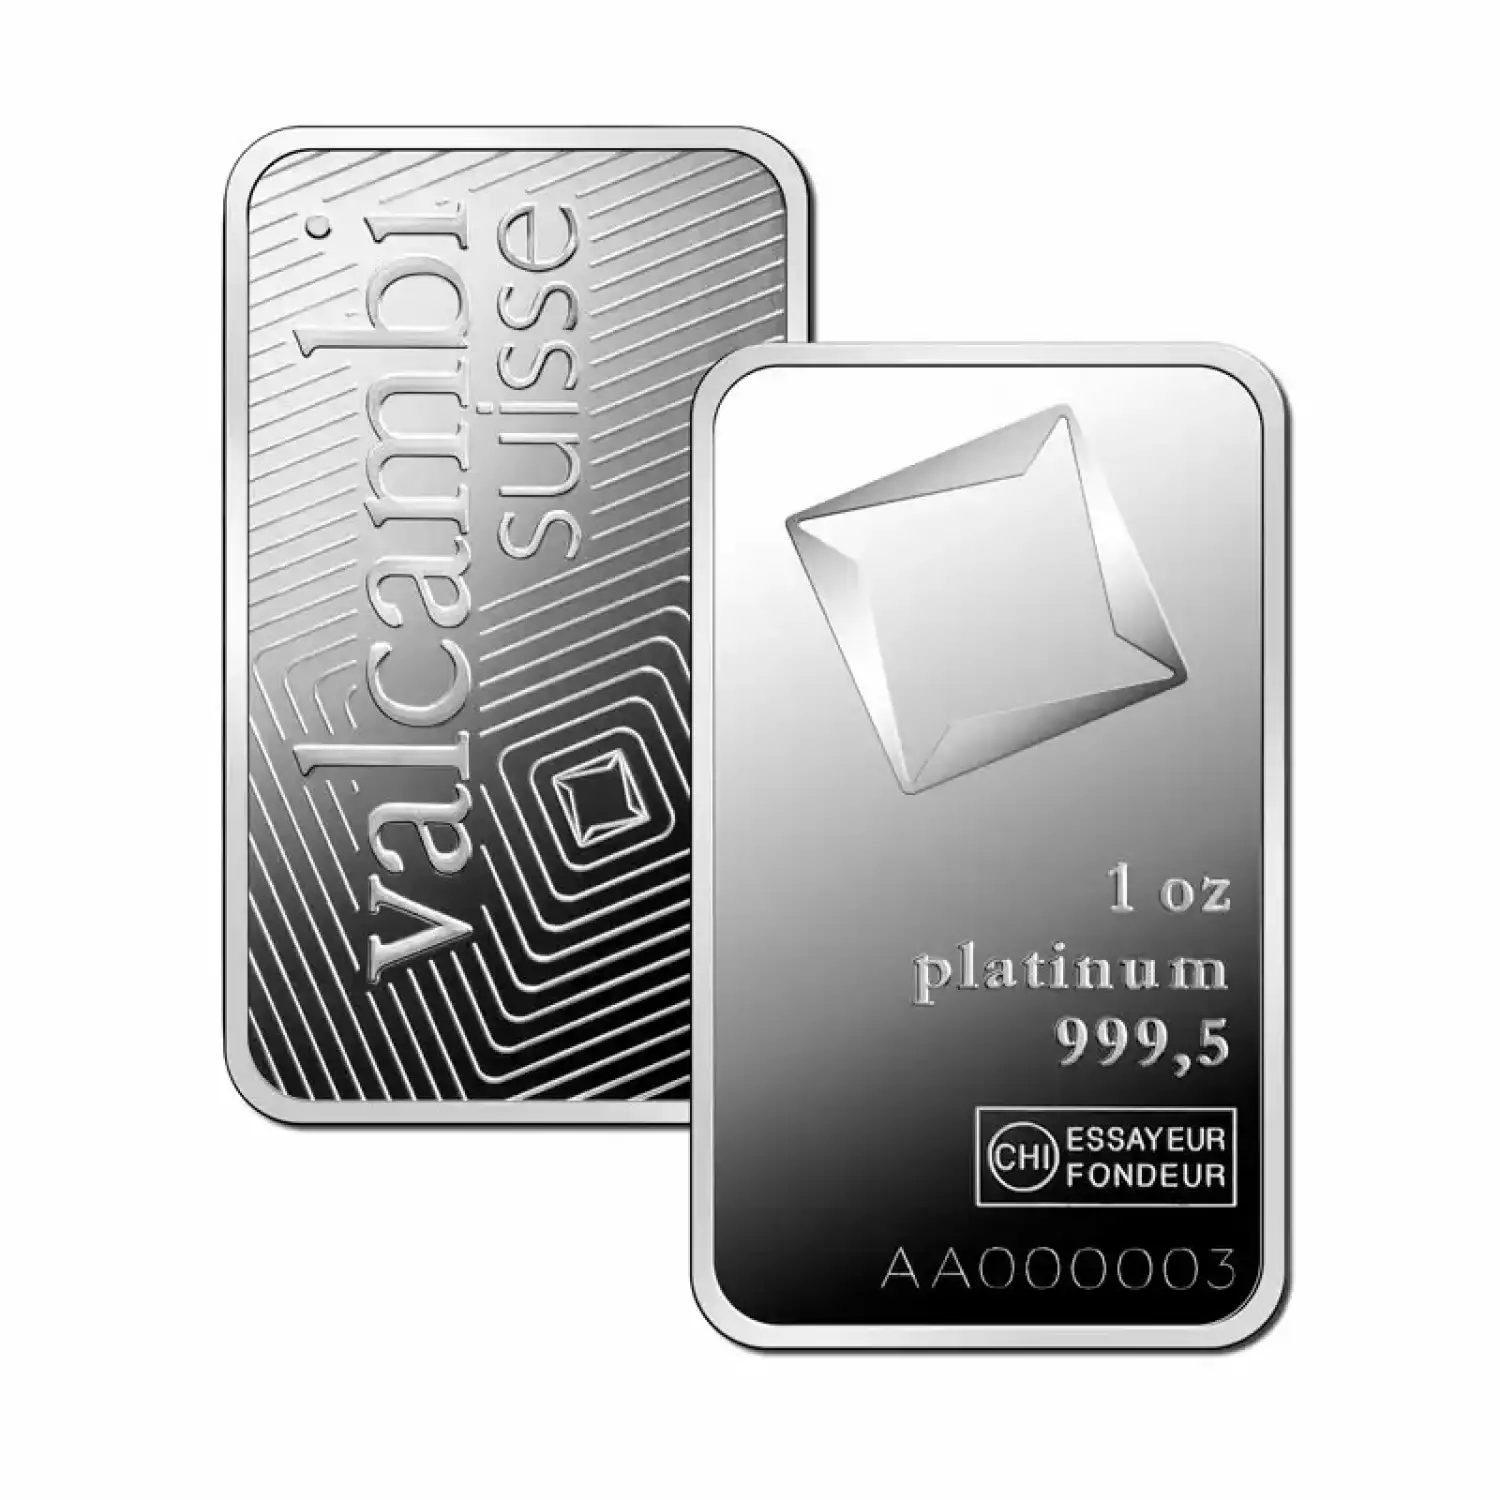 1oz Valcambi Minted Platinum Bar (2)